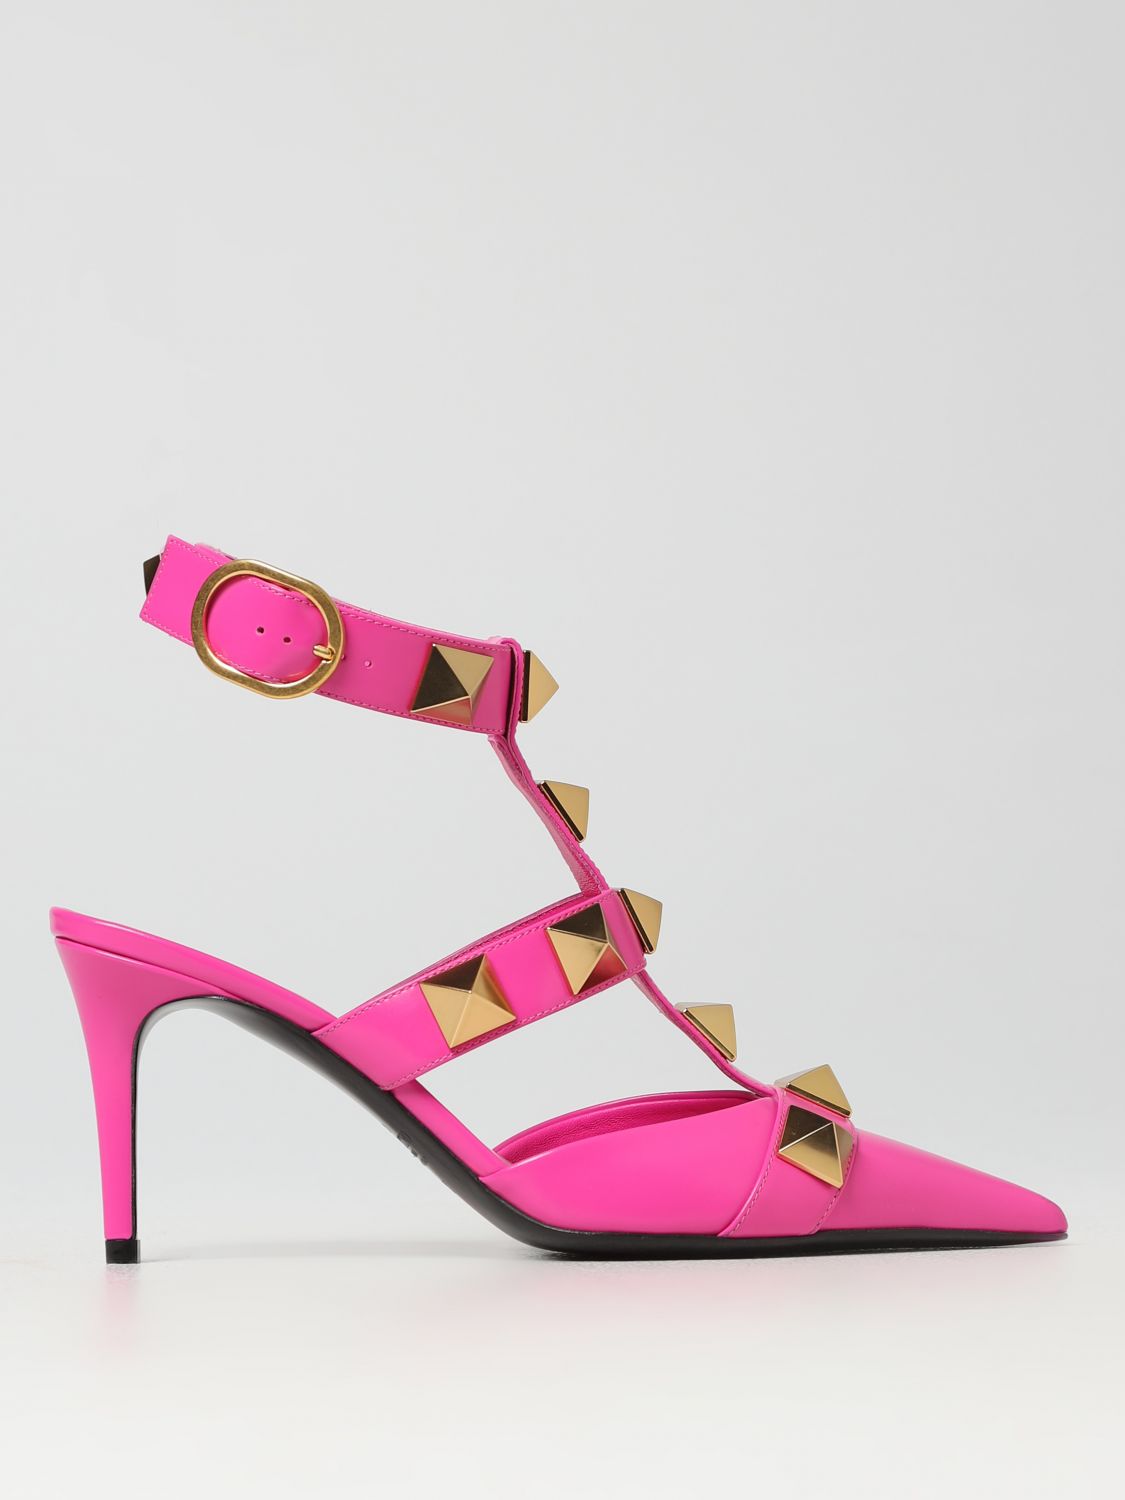 VALENTINO GARAVANI: Roman Stud pumps in leather - Pink | Valentino Garavani high heel shoes 2W2S0CB2ZWM online on